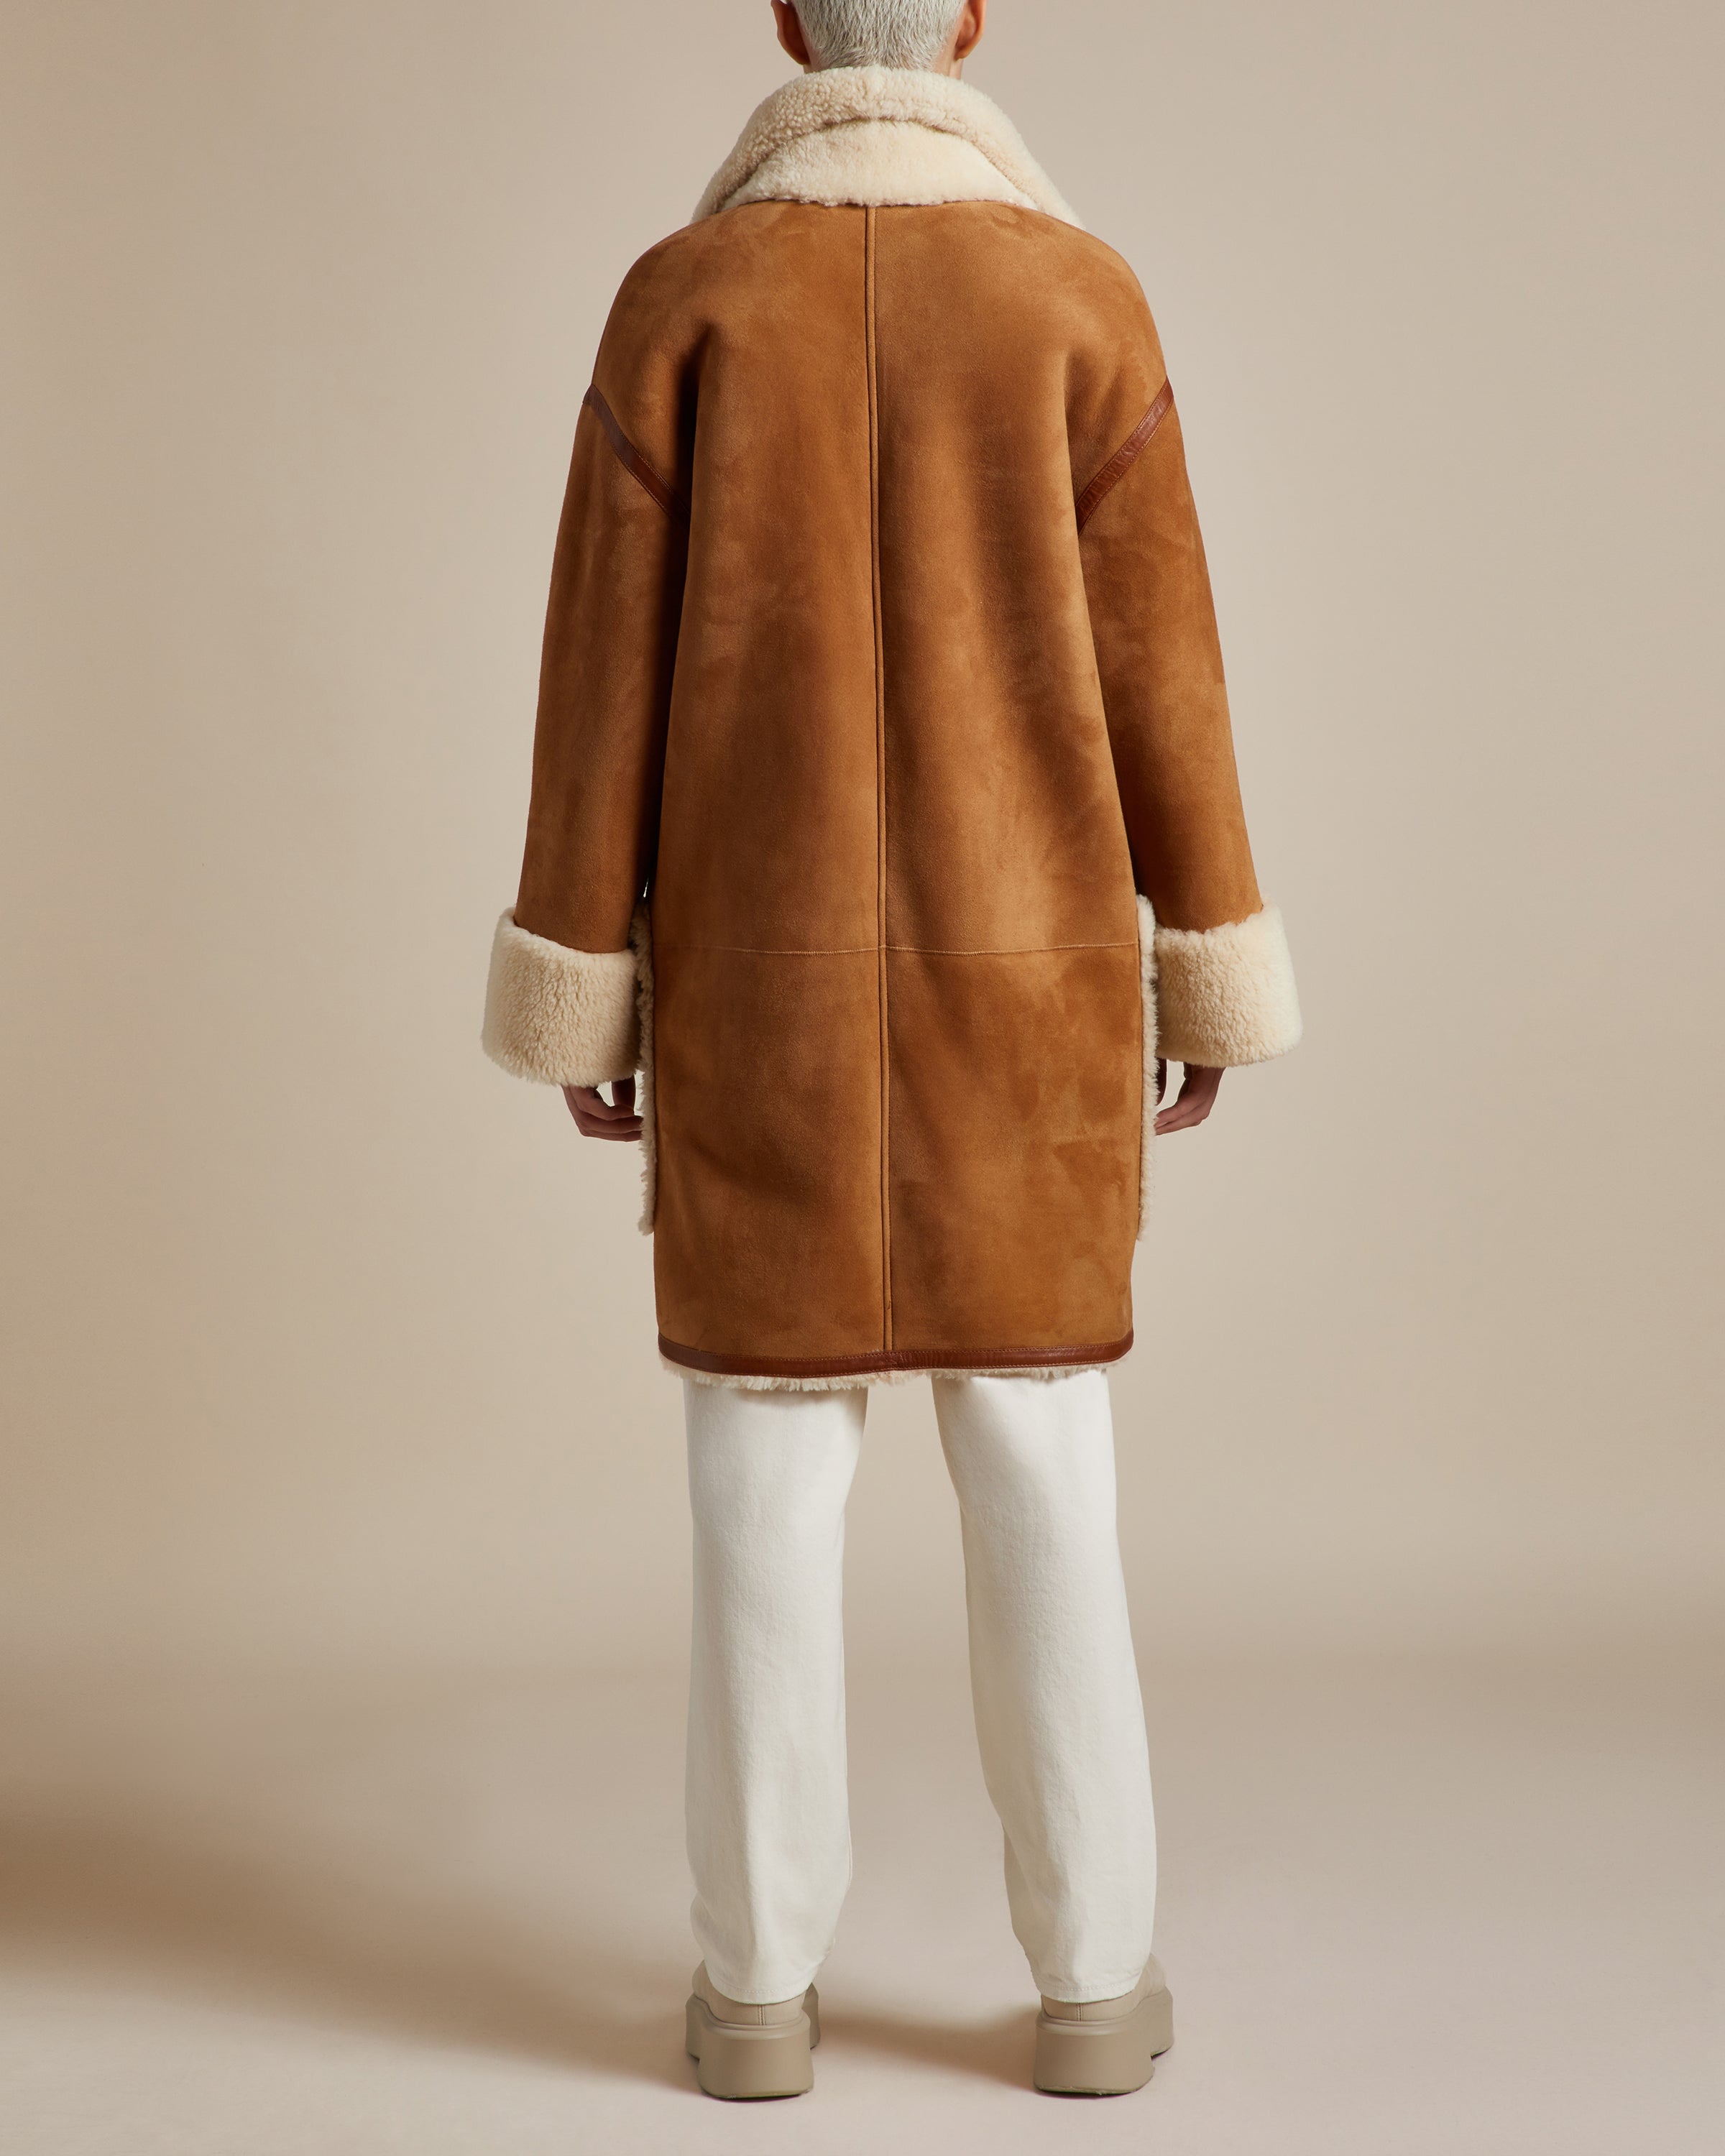 Sheepskin Short Fur Jacket, Camel Suede, Outerwear